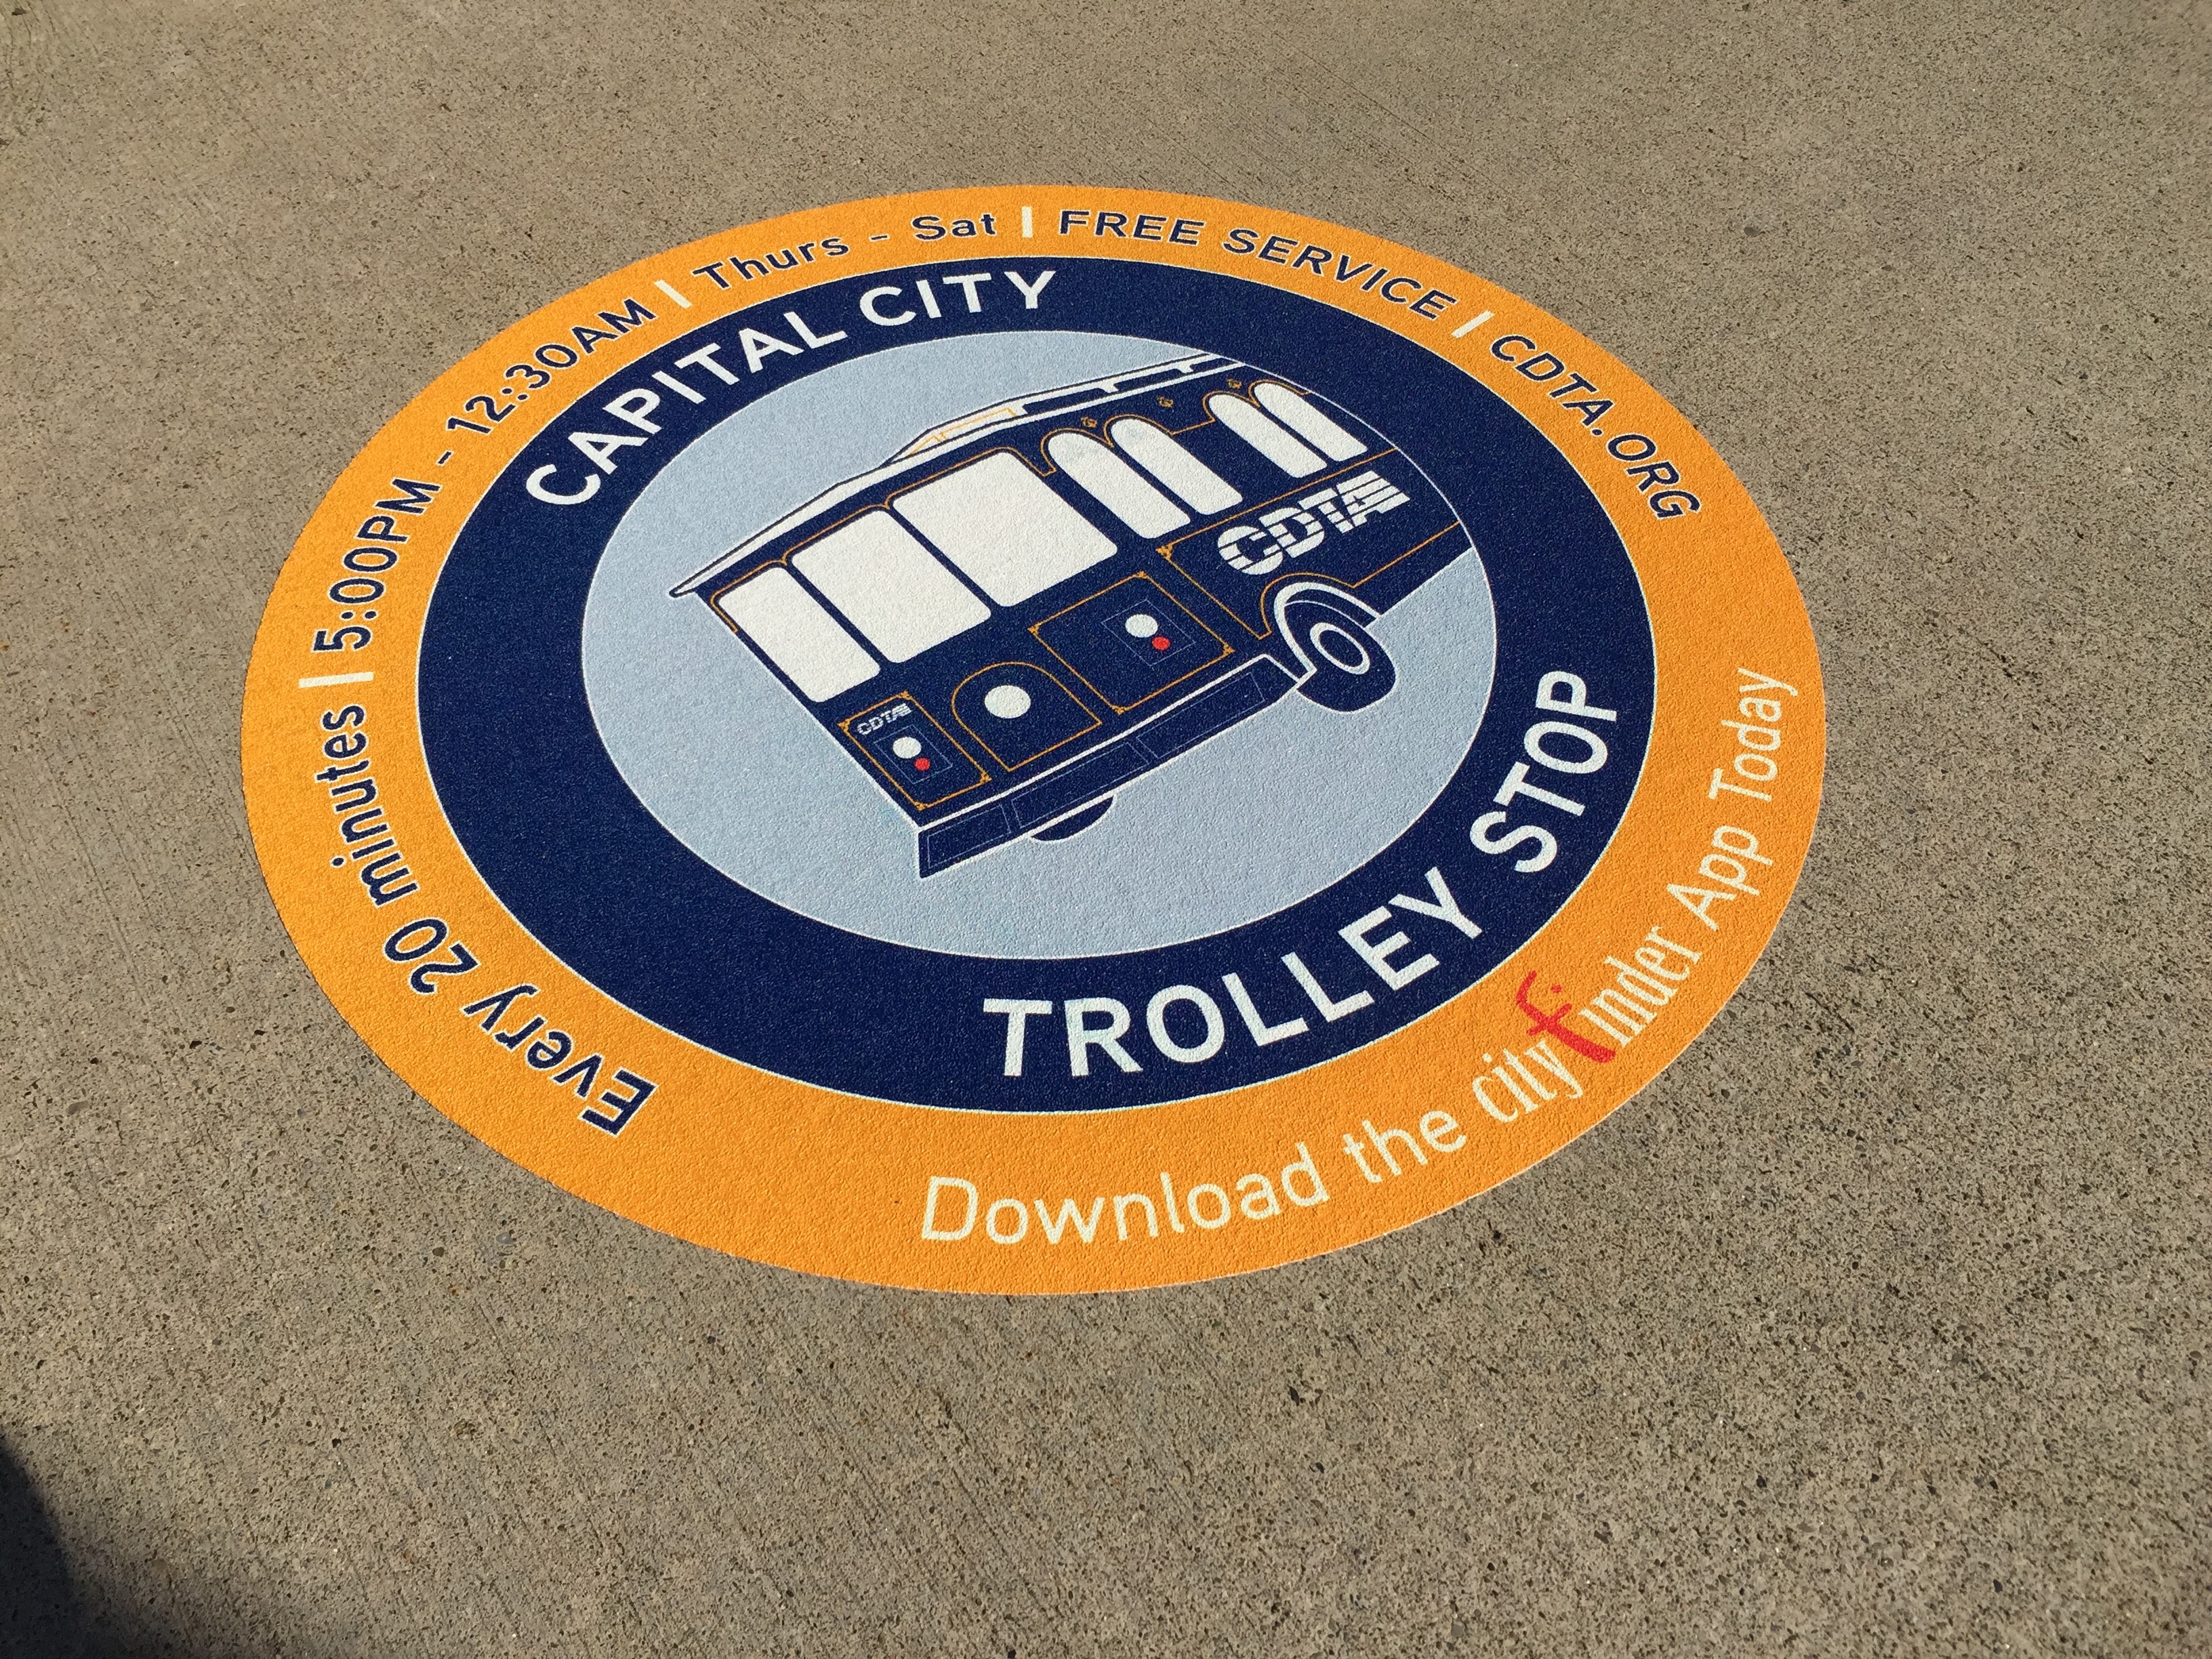 Capital City Trolley